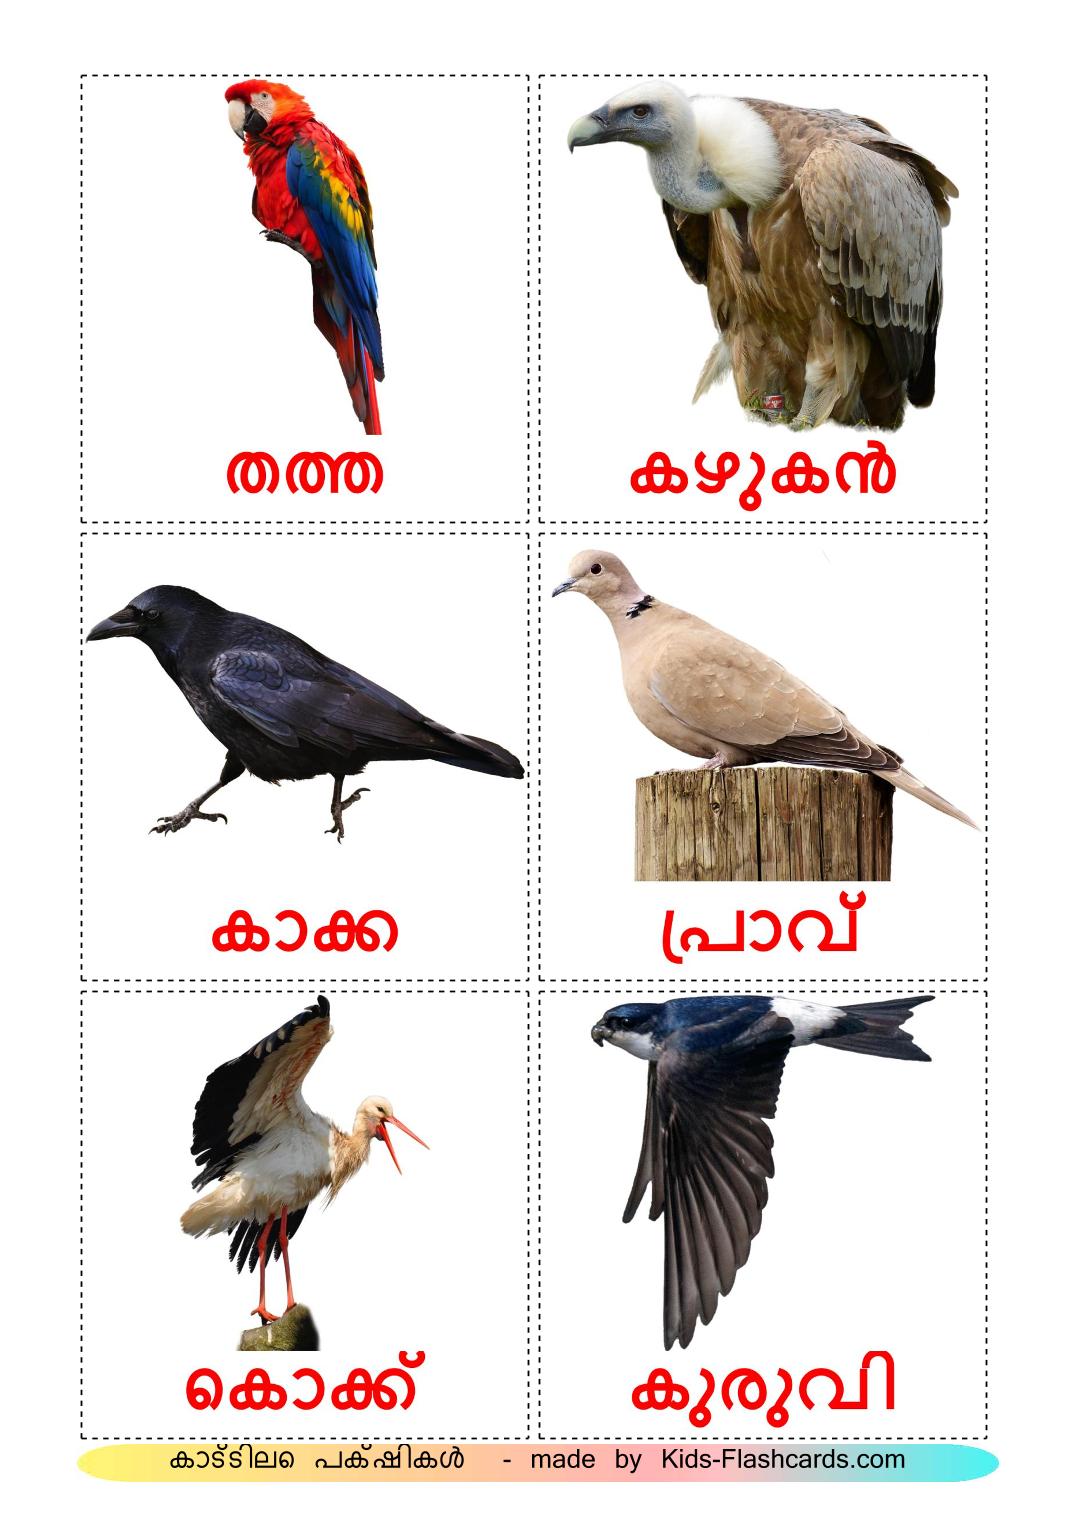 Wilde vogels - 18 gratis printbare malayalame kaarten